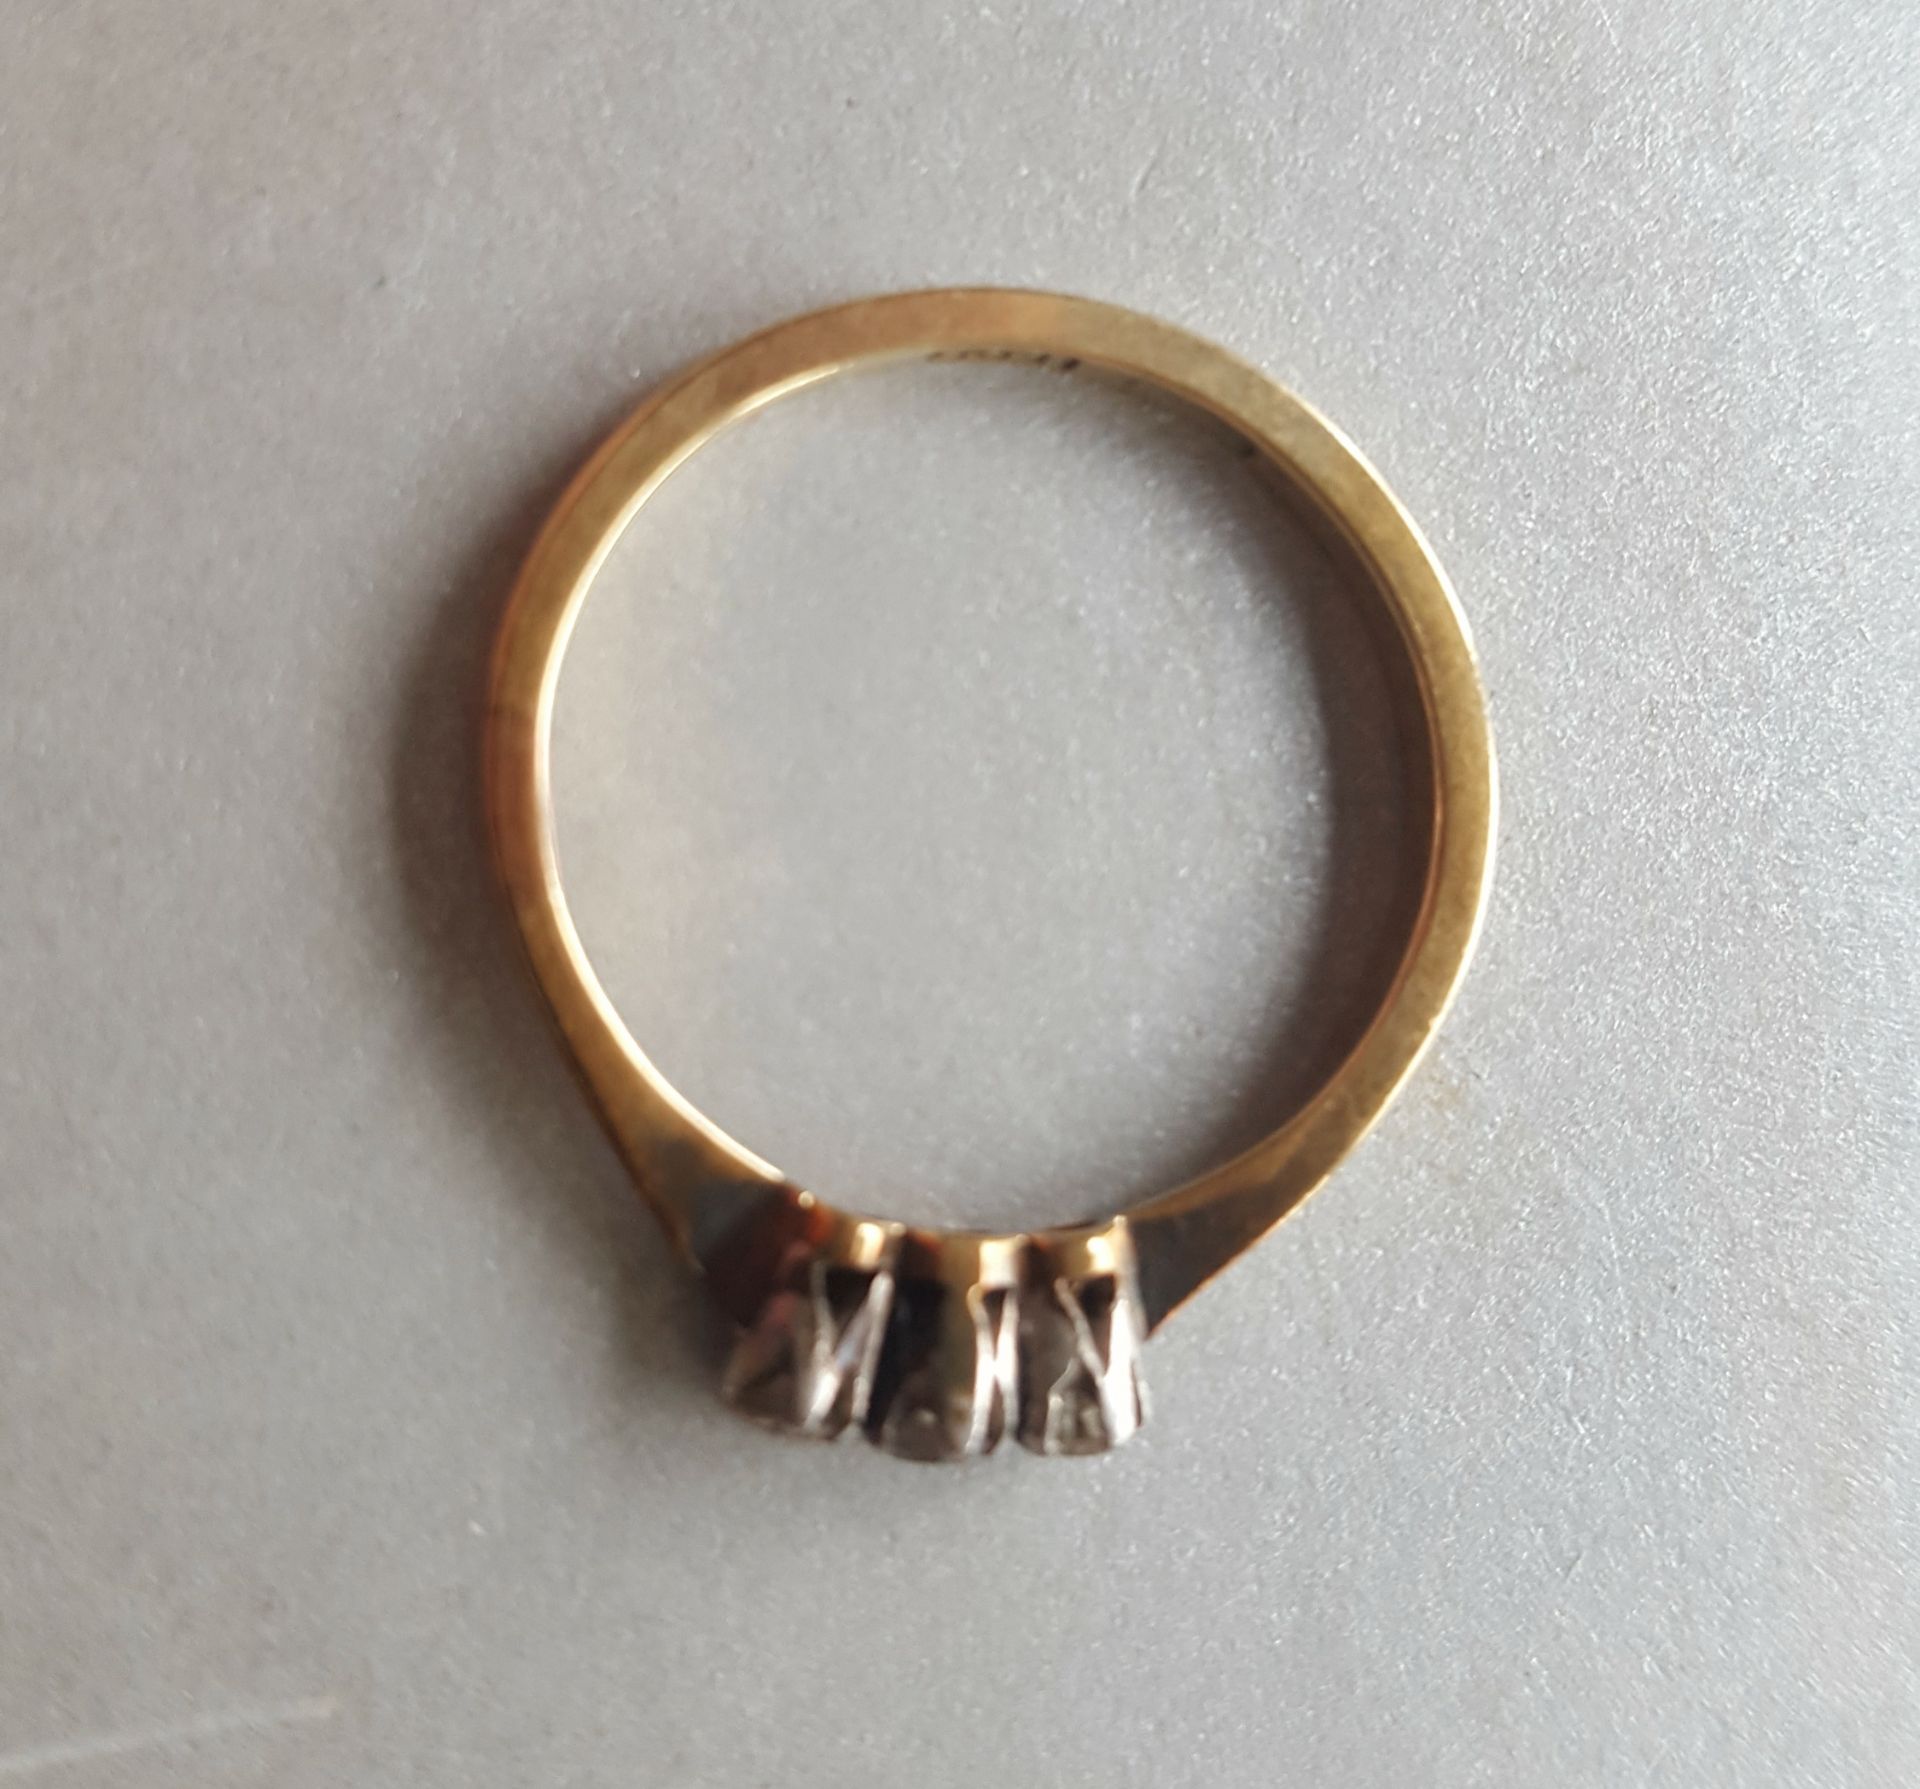 Vintage 18ct Diamond Gold Ring. Three Diamonds Size 'M' - Image 2 of 2